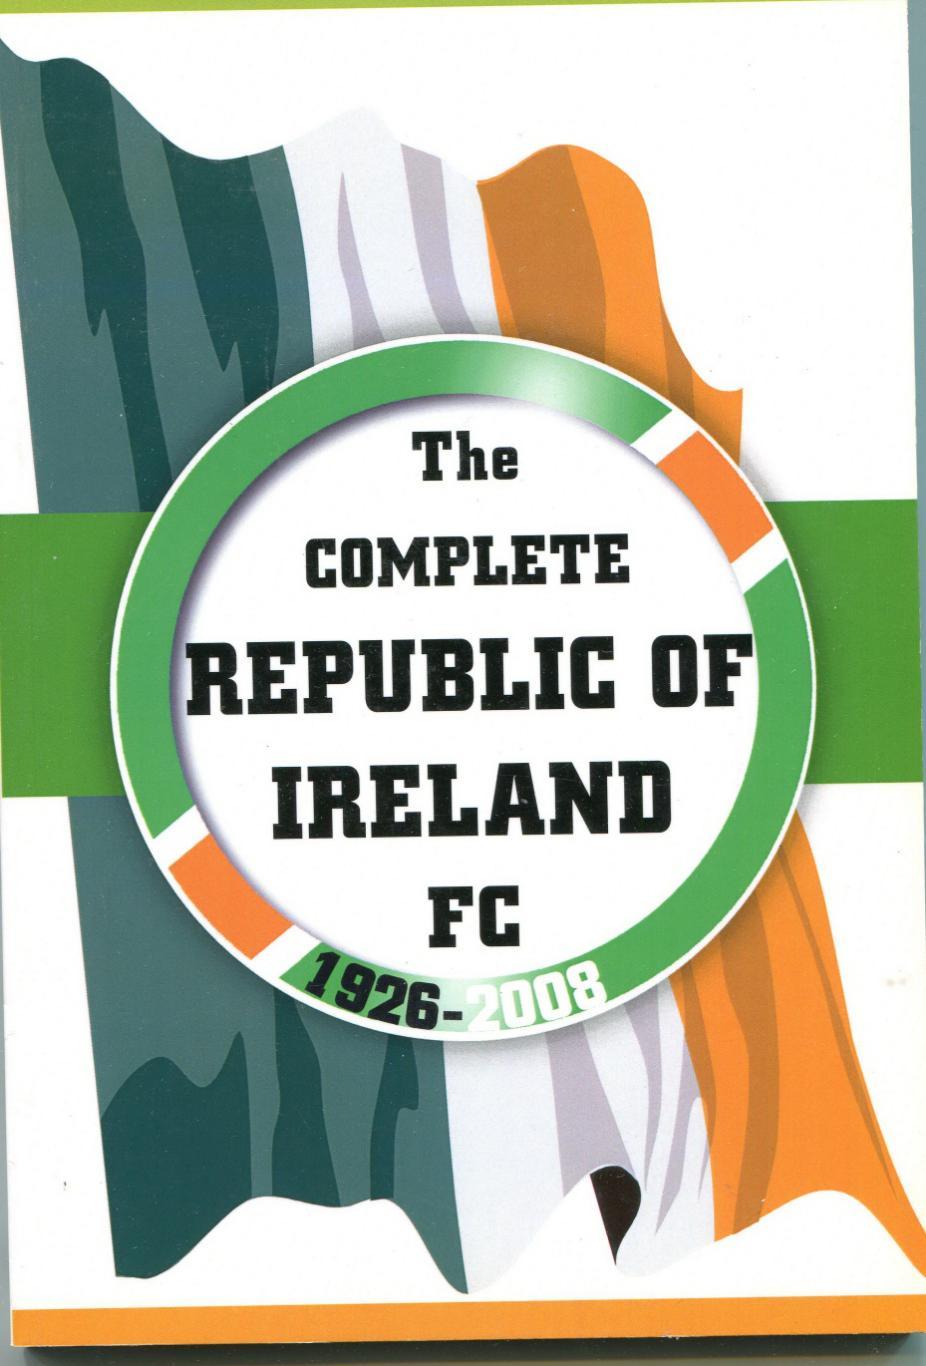 The complete republic of ireland FC 1926-2008